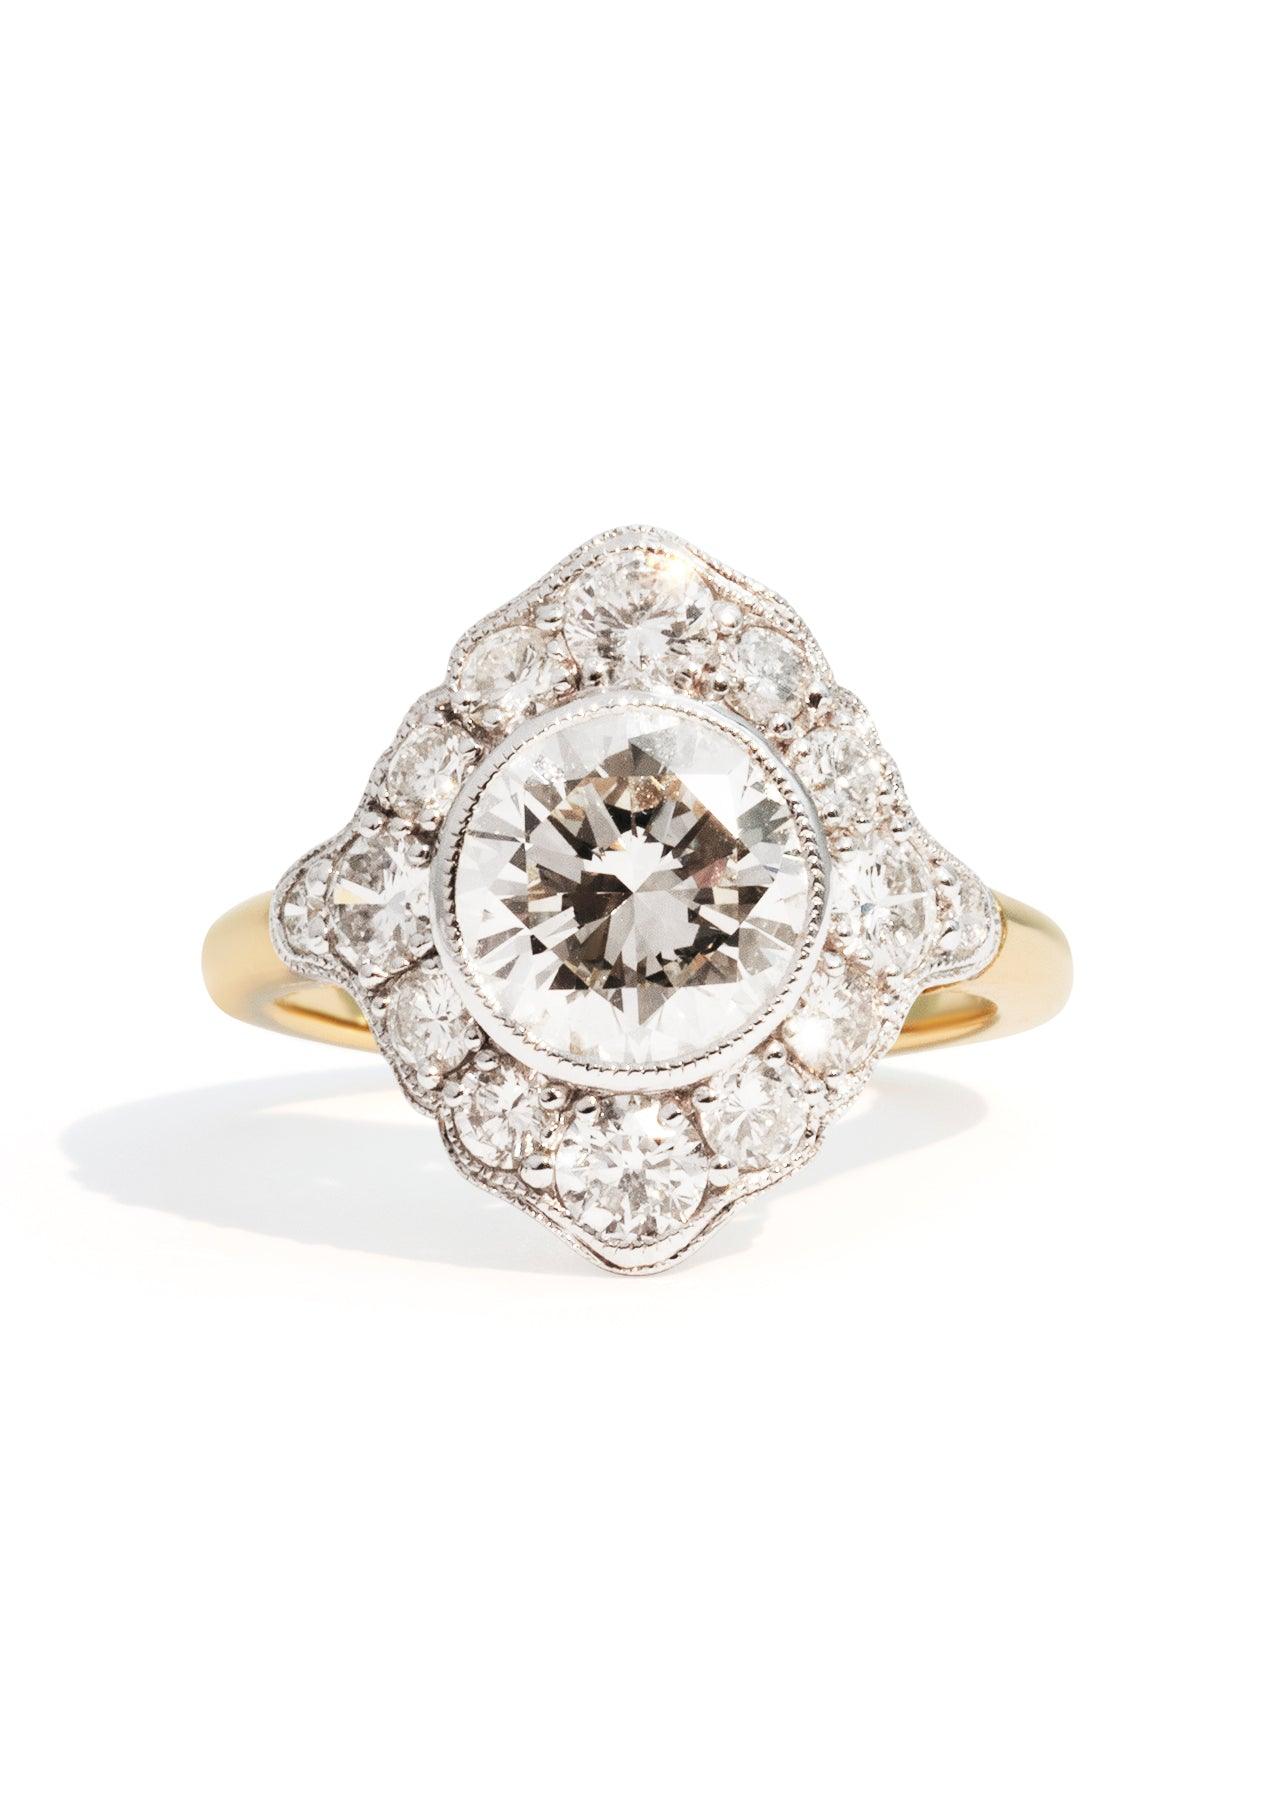 The Lavina 3.36ct Diamond Ring